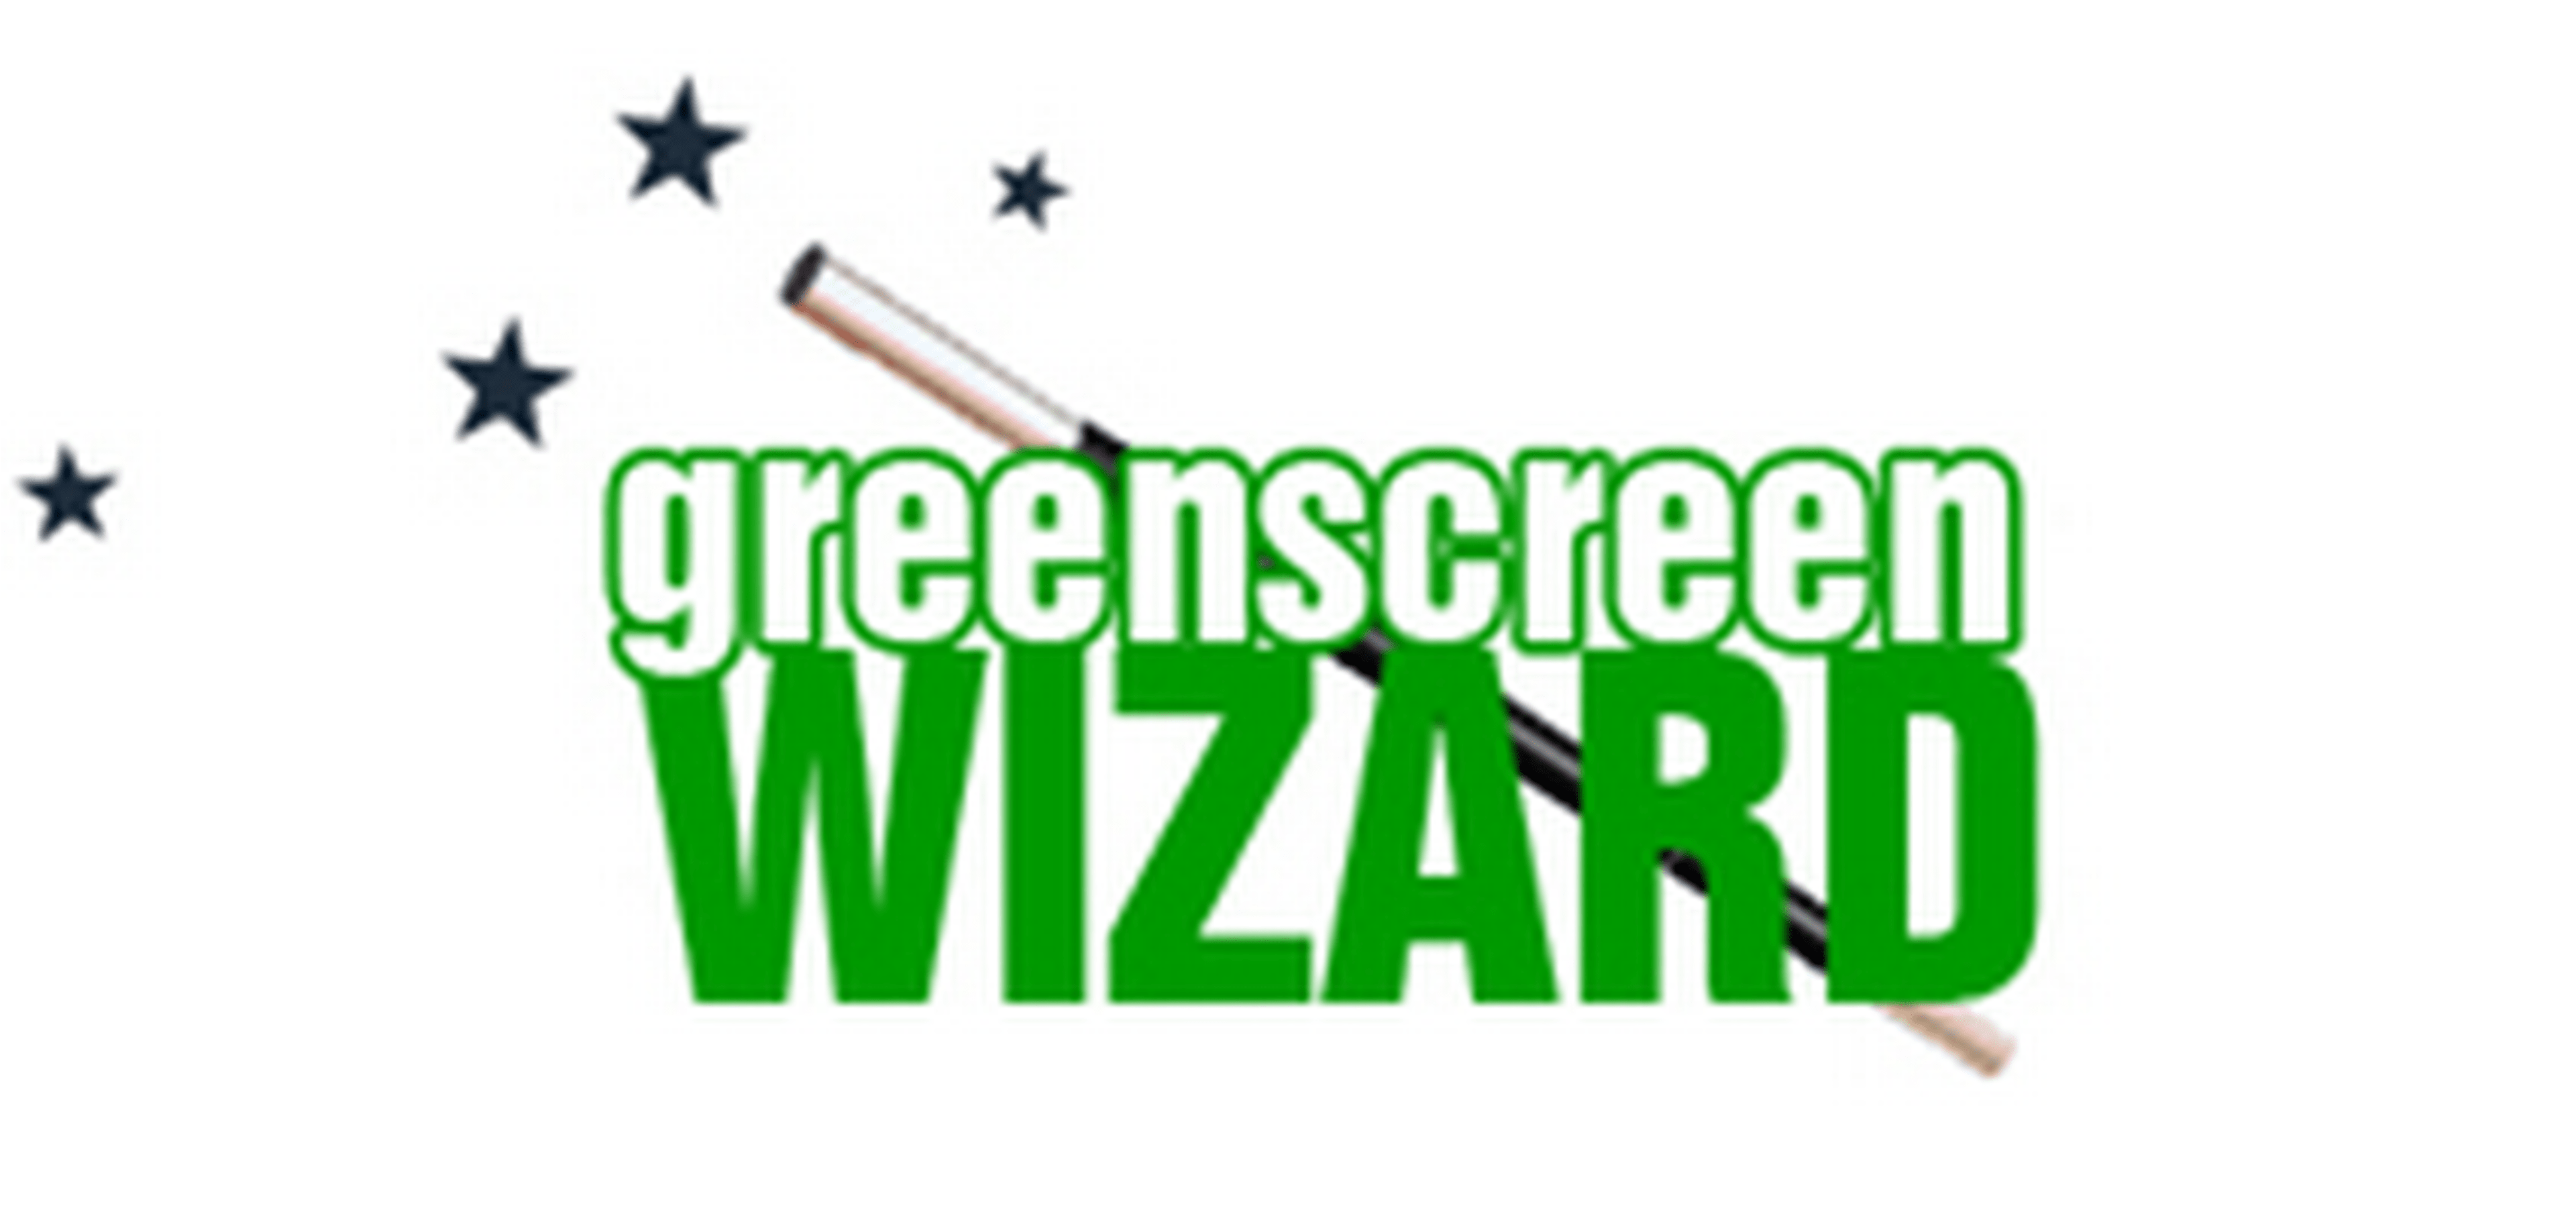 Green Screen WizardCode